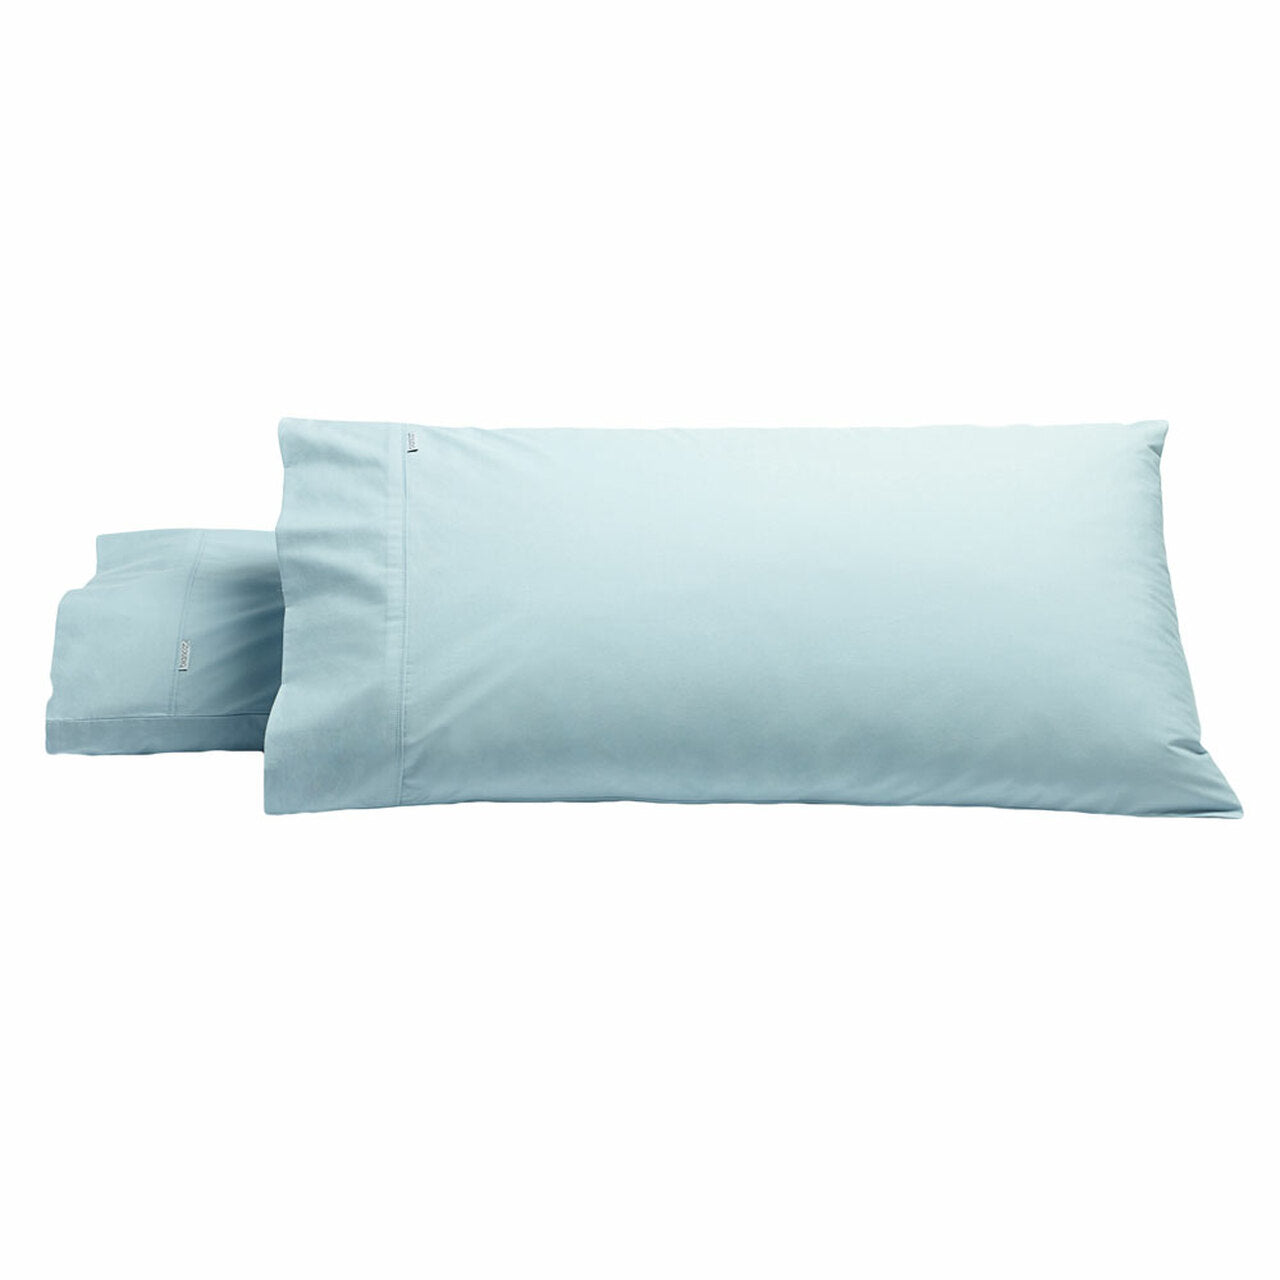 Heston Blue KING SIZE Pillowcase Pair by Bianca